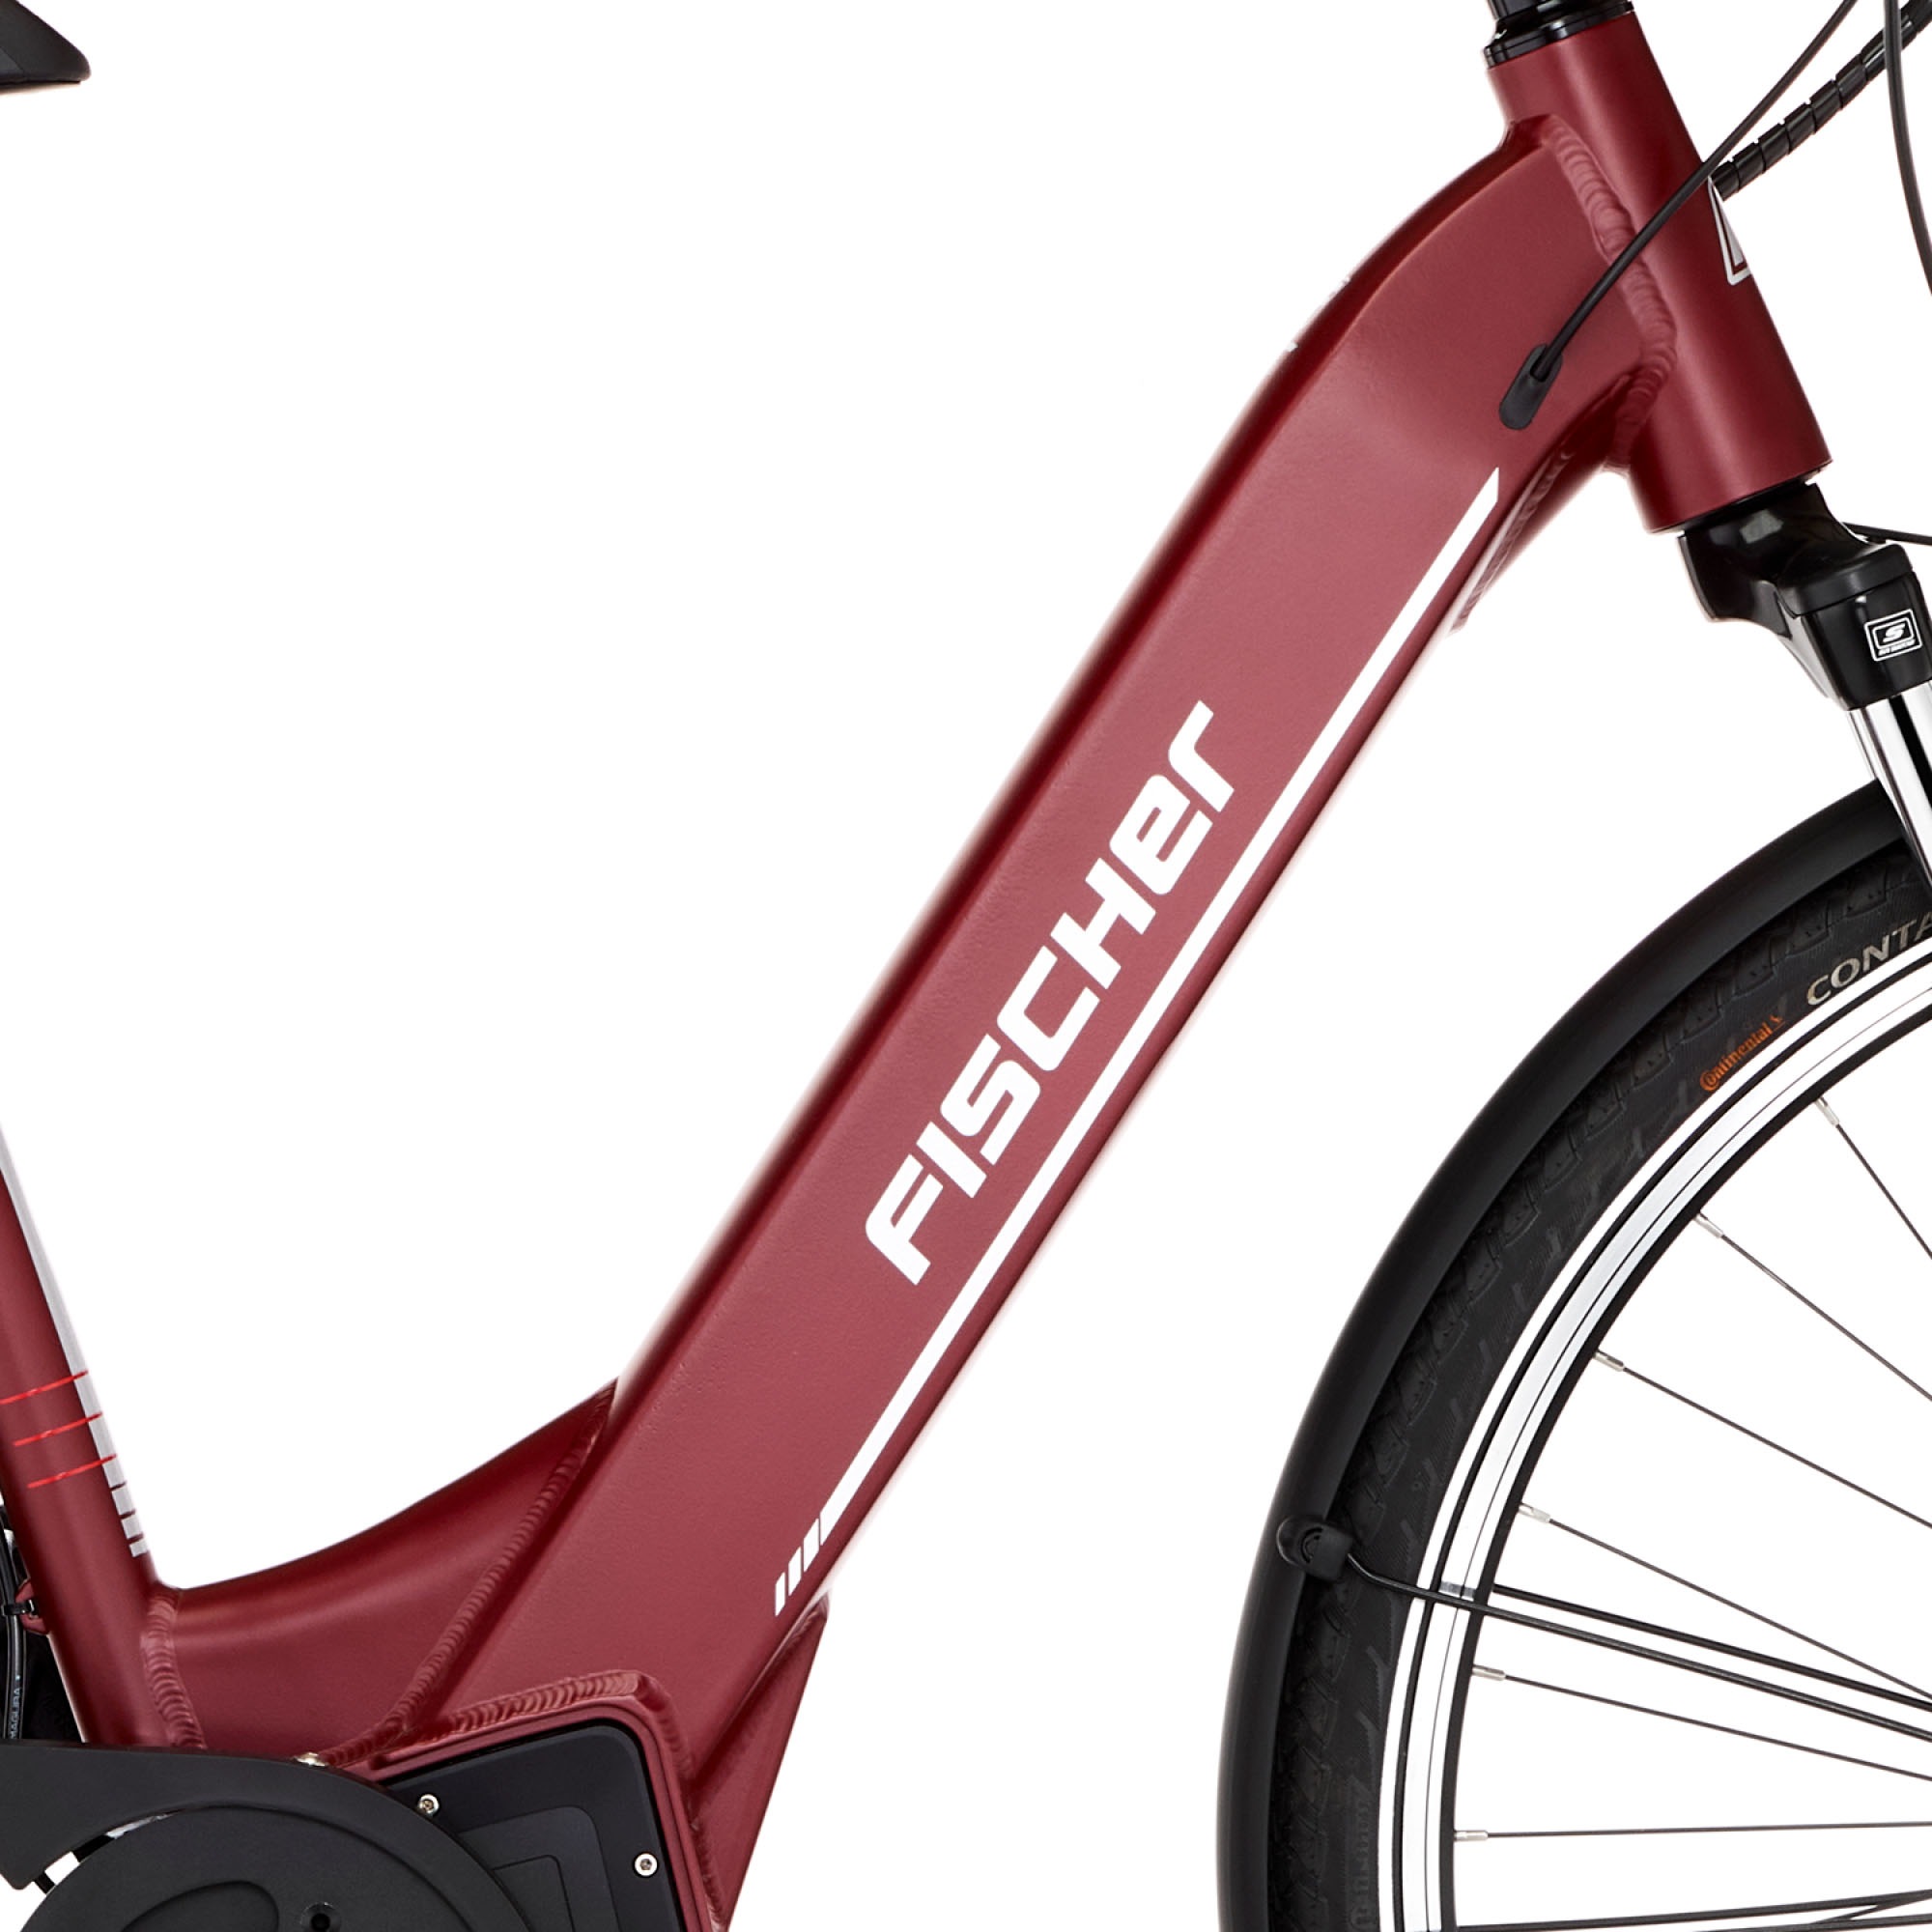 FISCHER Fahrrad E-Bike »CITA 5.0i - Sondermodell 504 44«, 7 Gang, Shimano, NEXUS, Mittelmotor 250 W, Pedelec